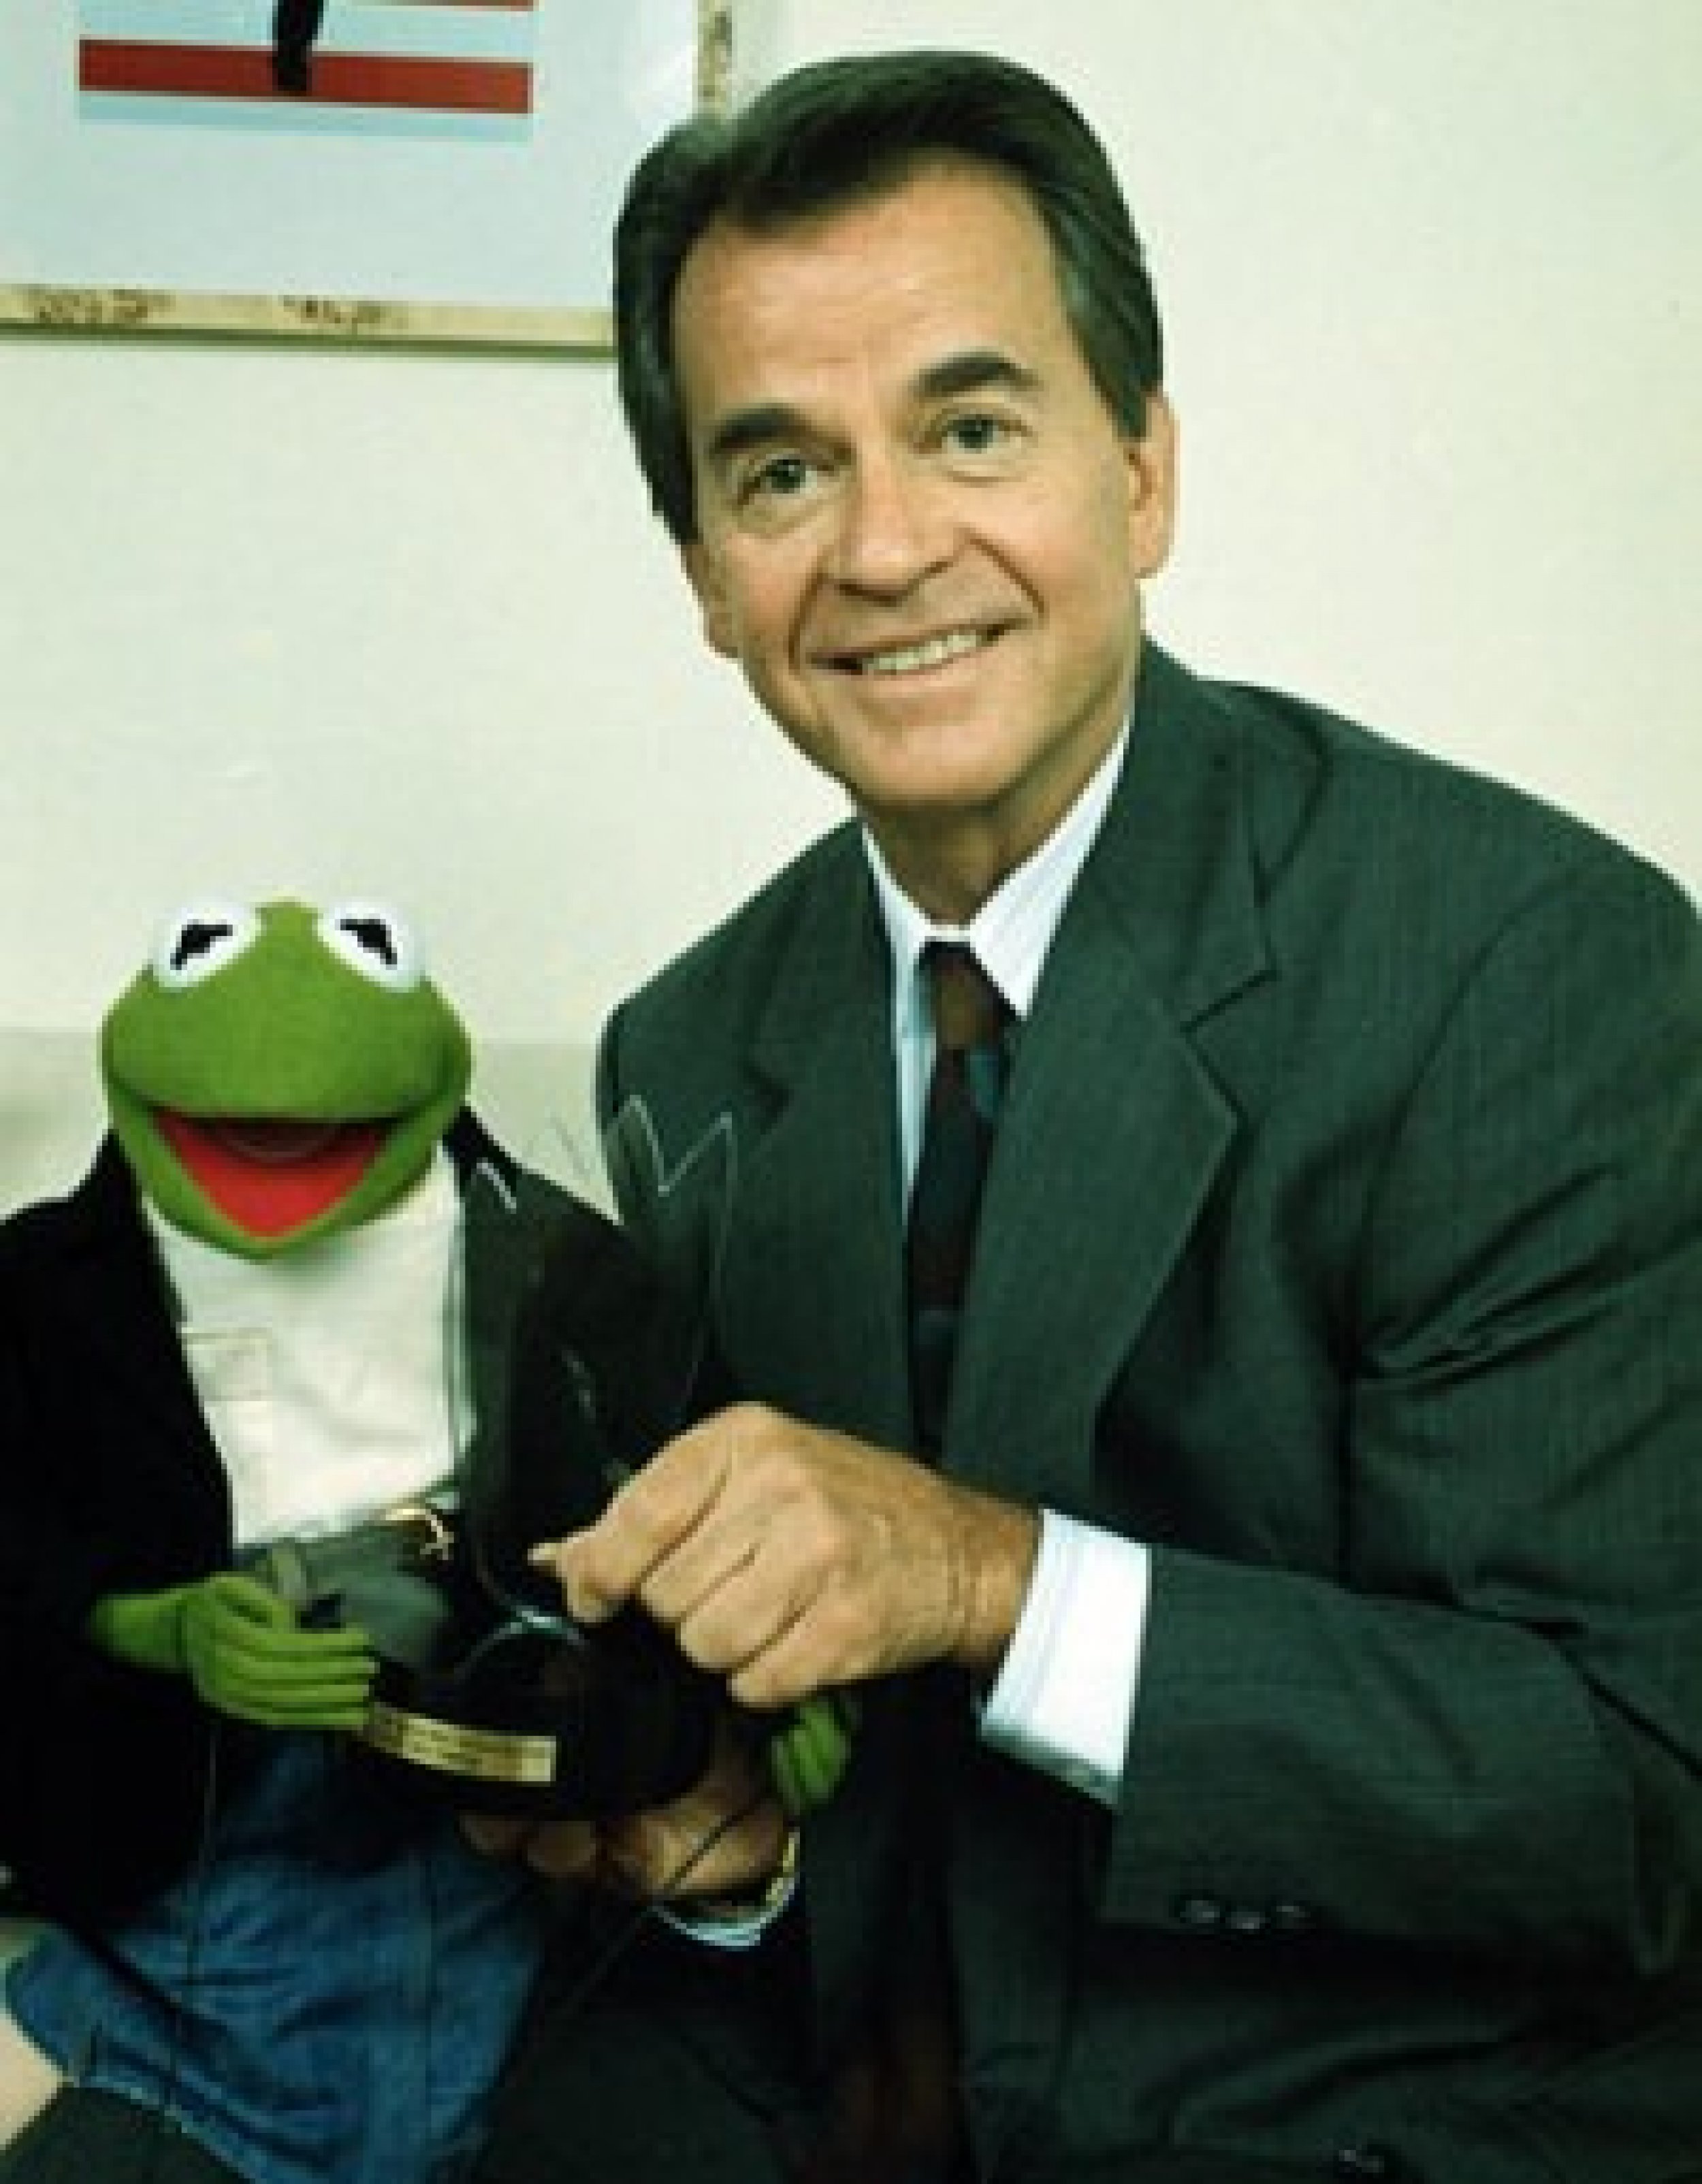 Dick Clark with Kermit The Frog